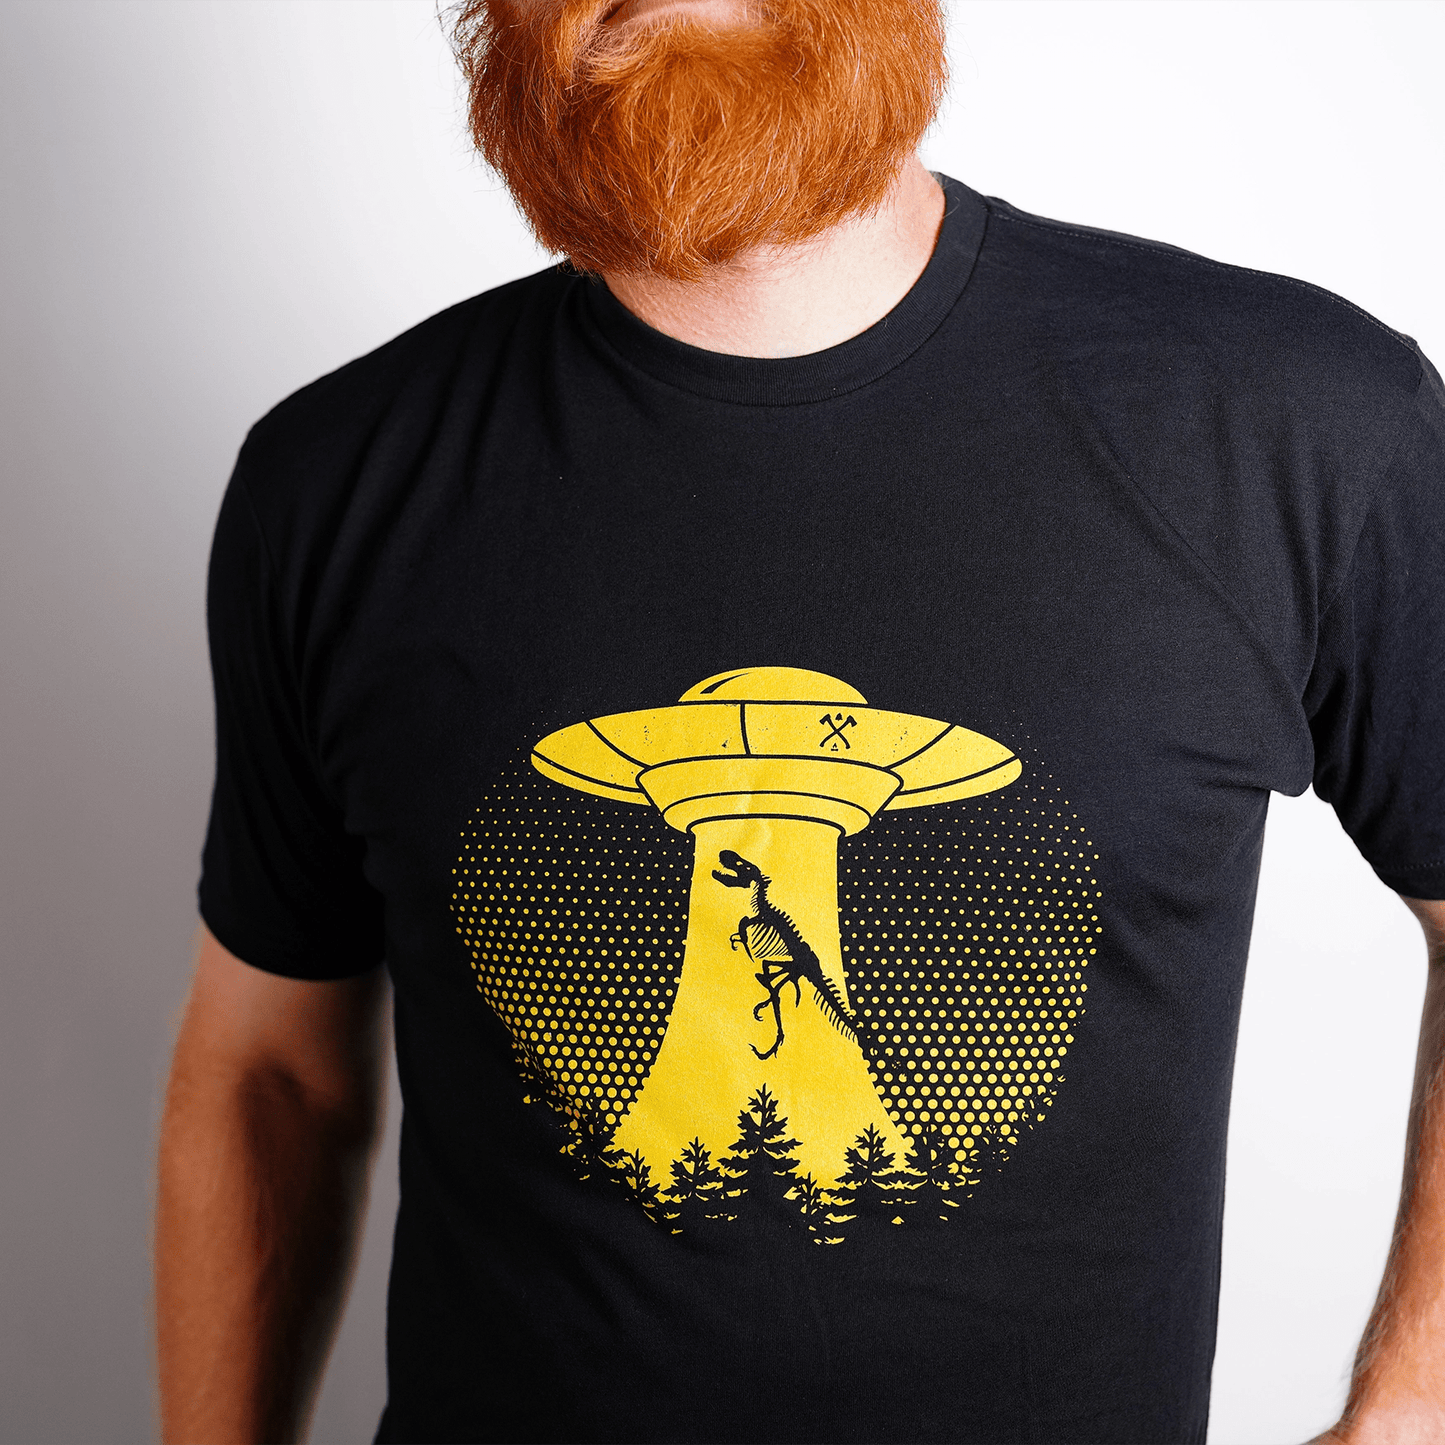 The UFO Shirt